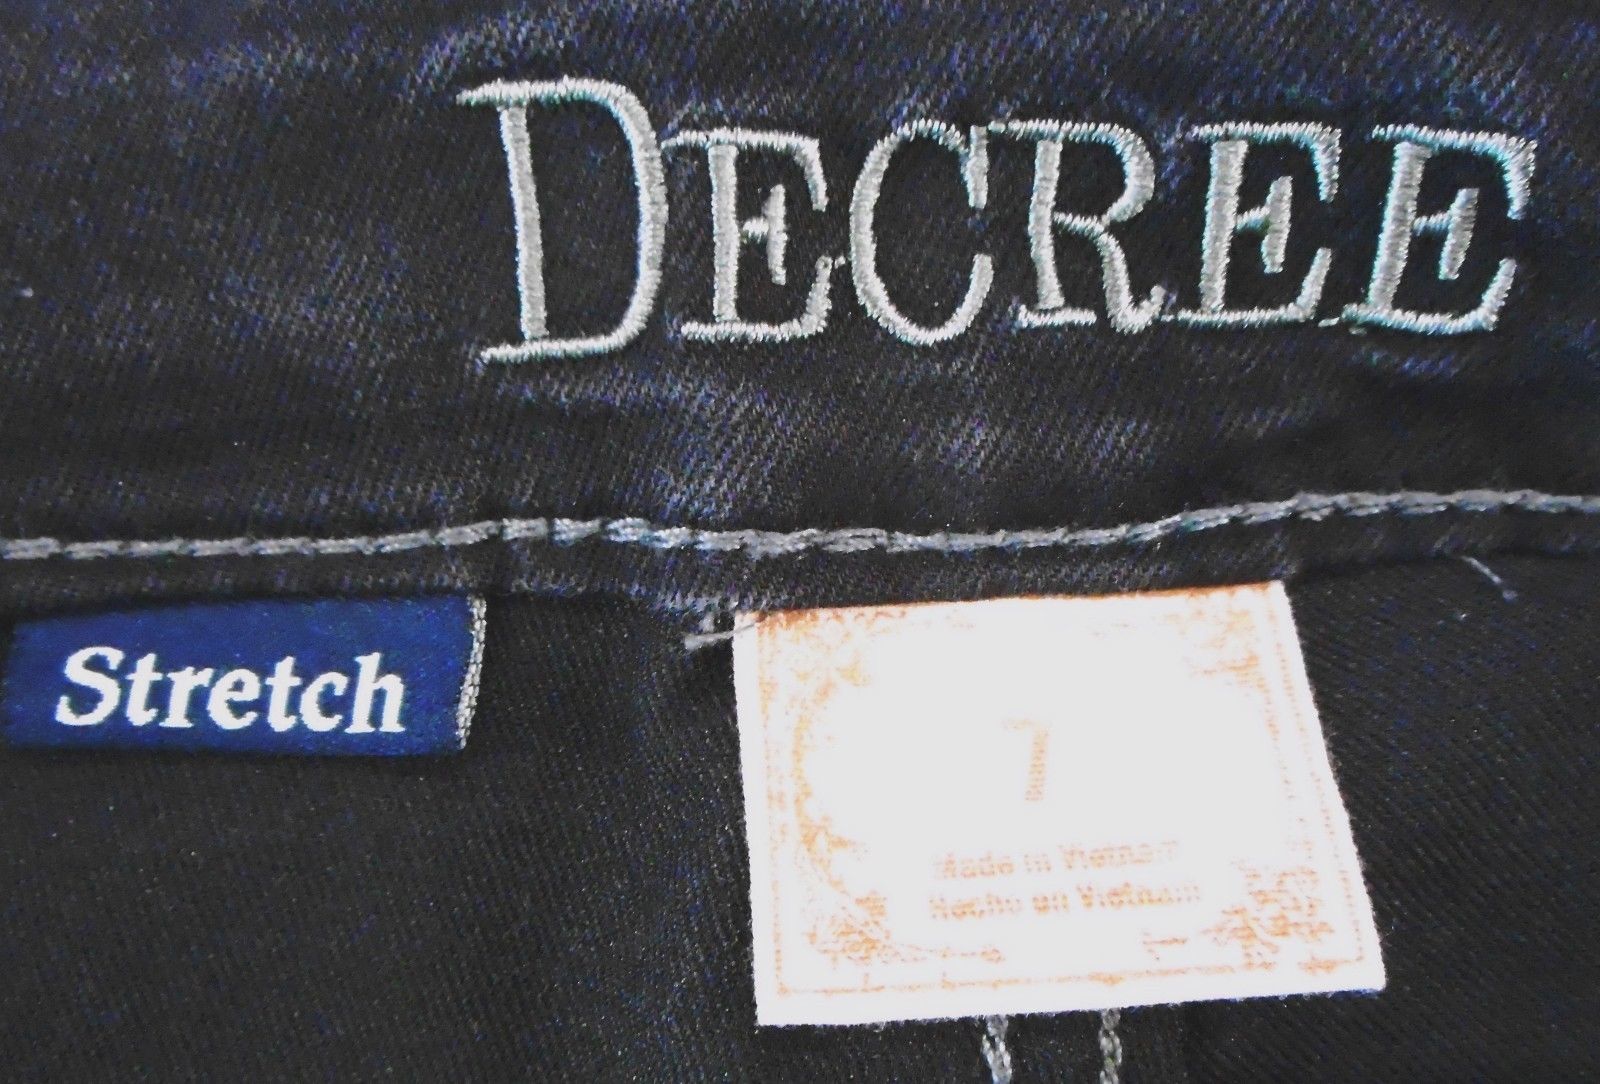 decree jeans womens